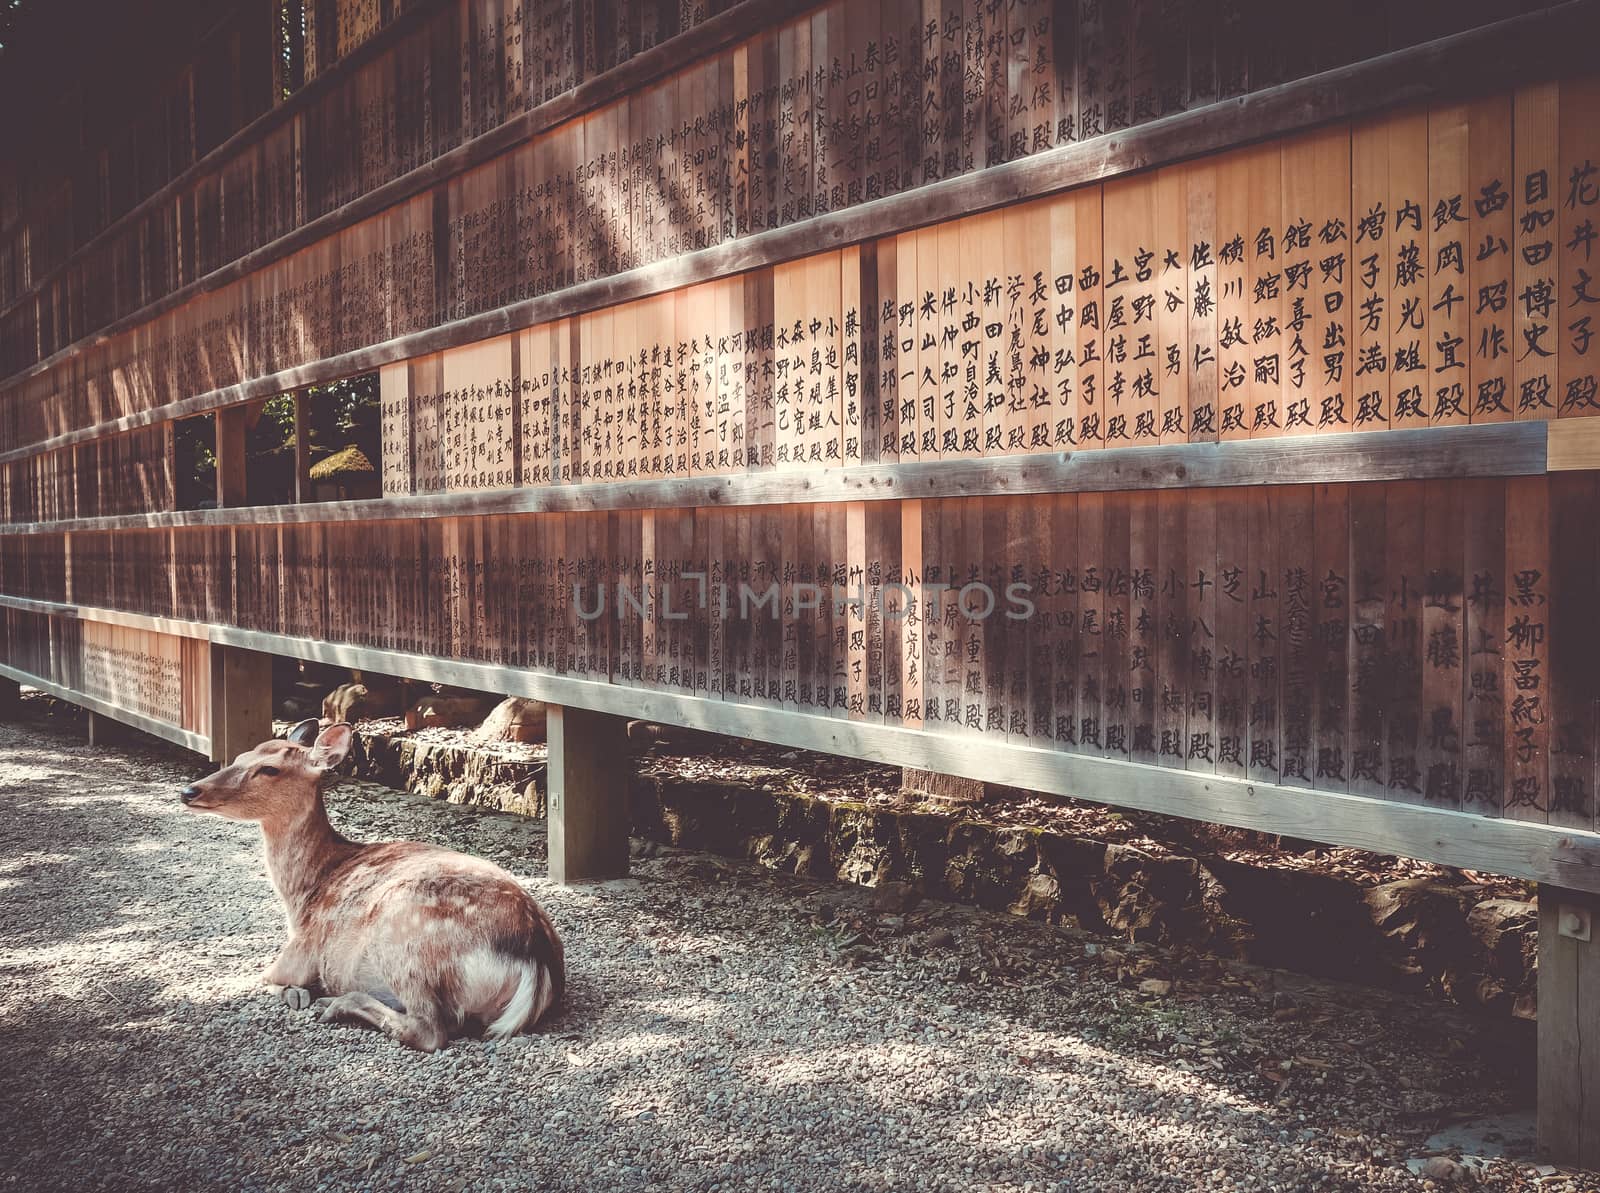 Sika deer in front of Wooden tablets, Nara, Japan